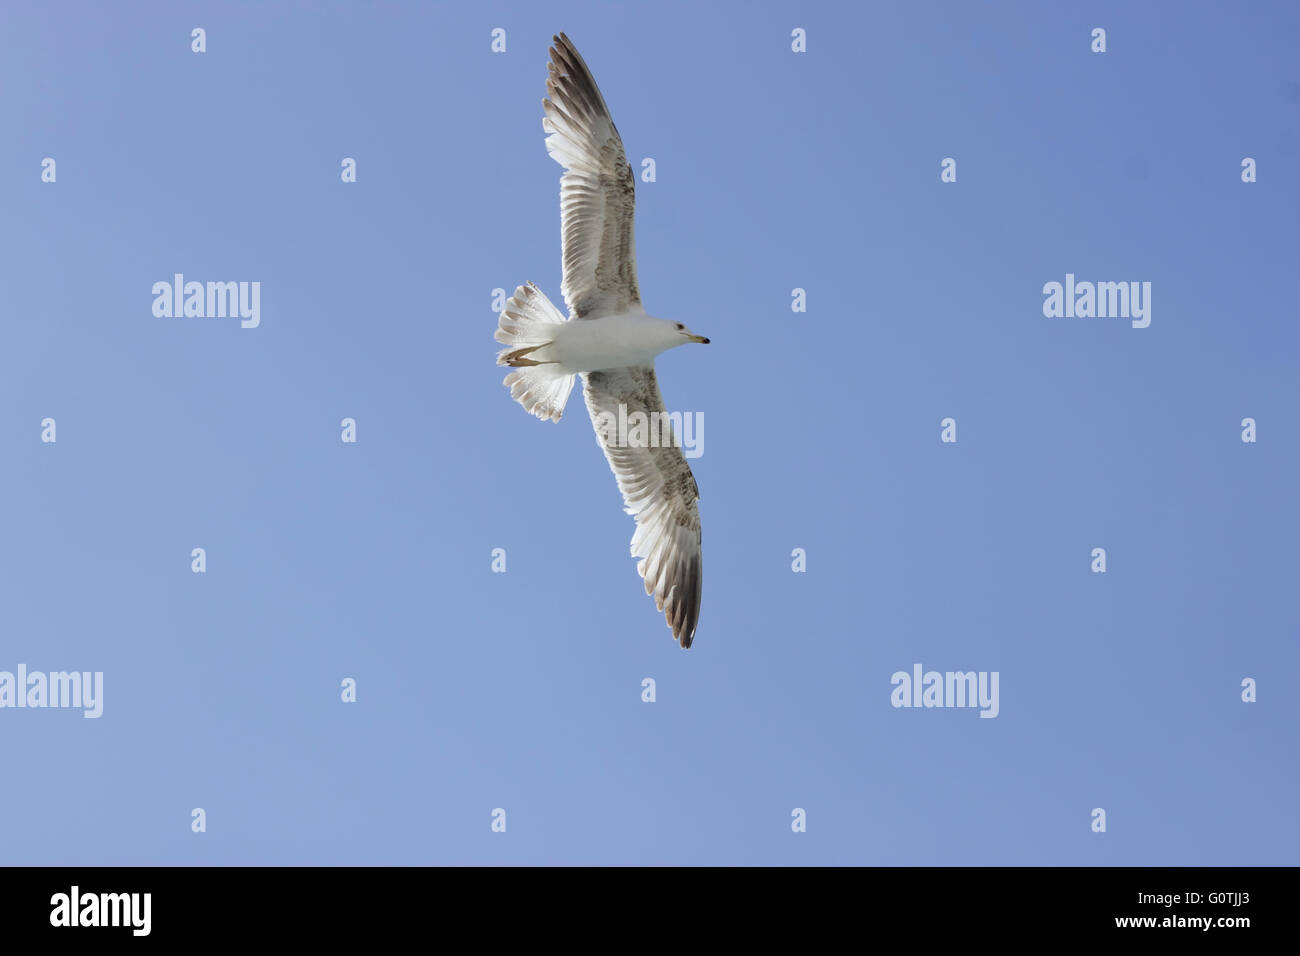 Empty sky area and a Yellow-legged seagull (Laridae family, sp. Larus michahellis) in flight. Stock Photo